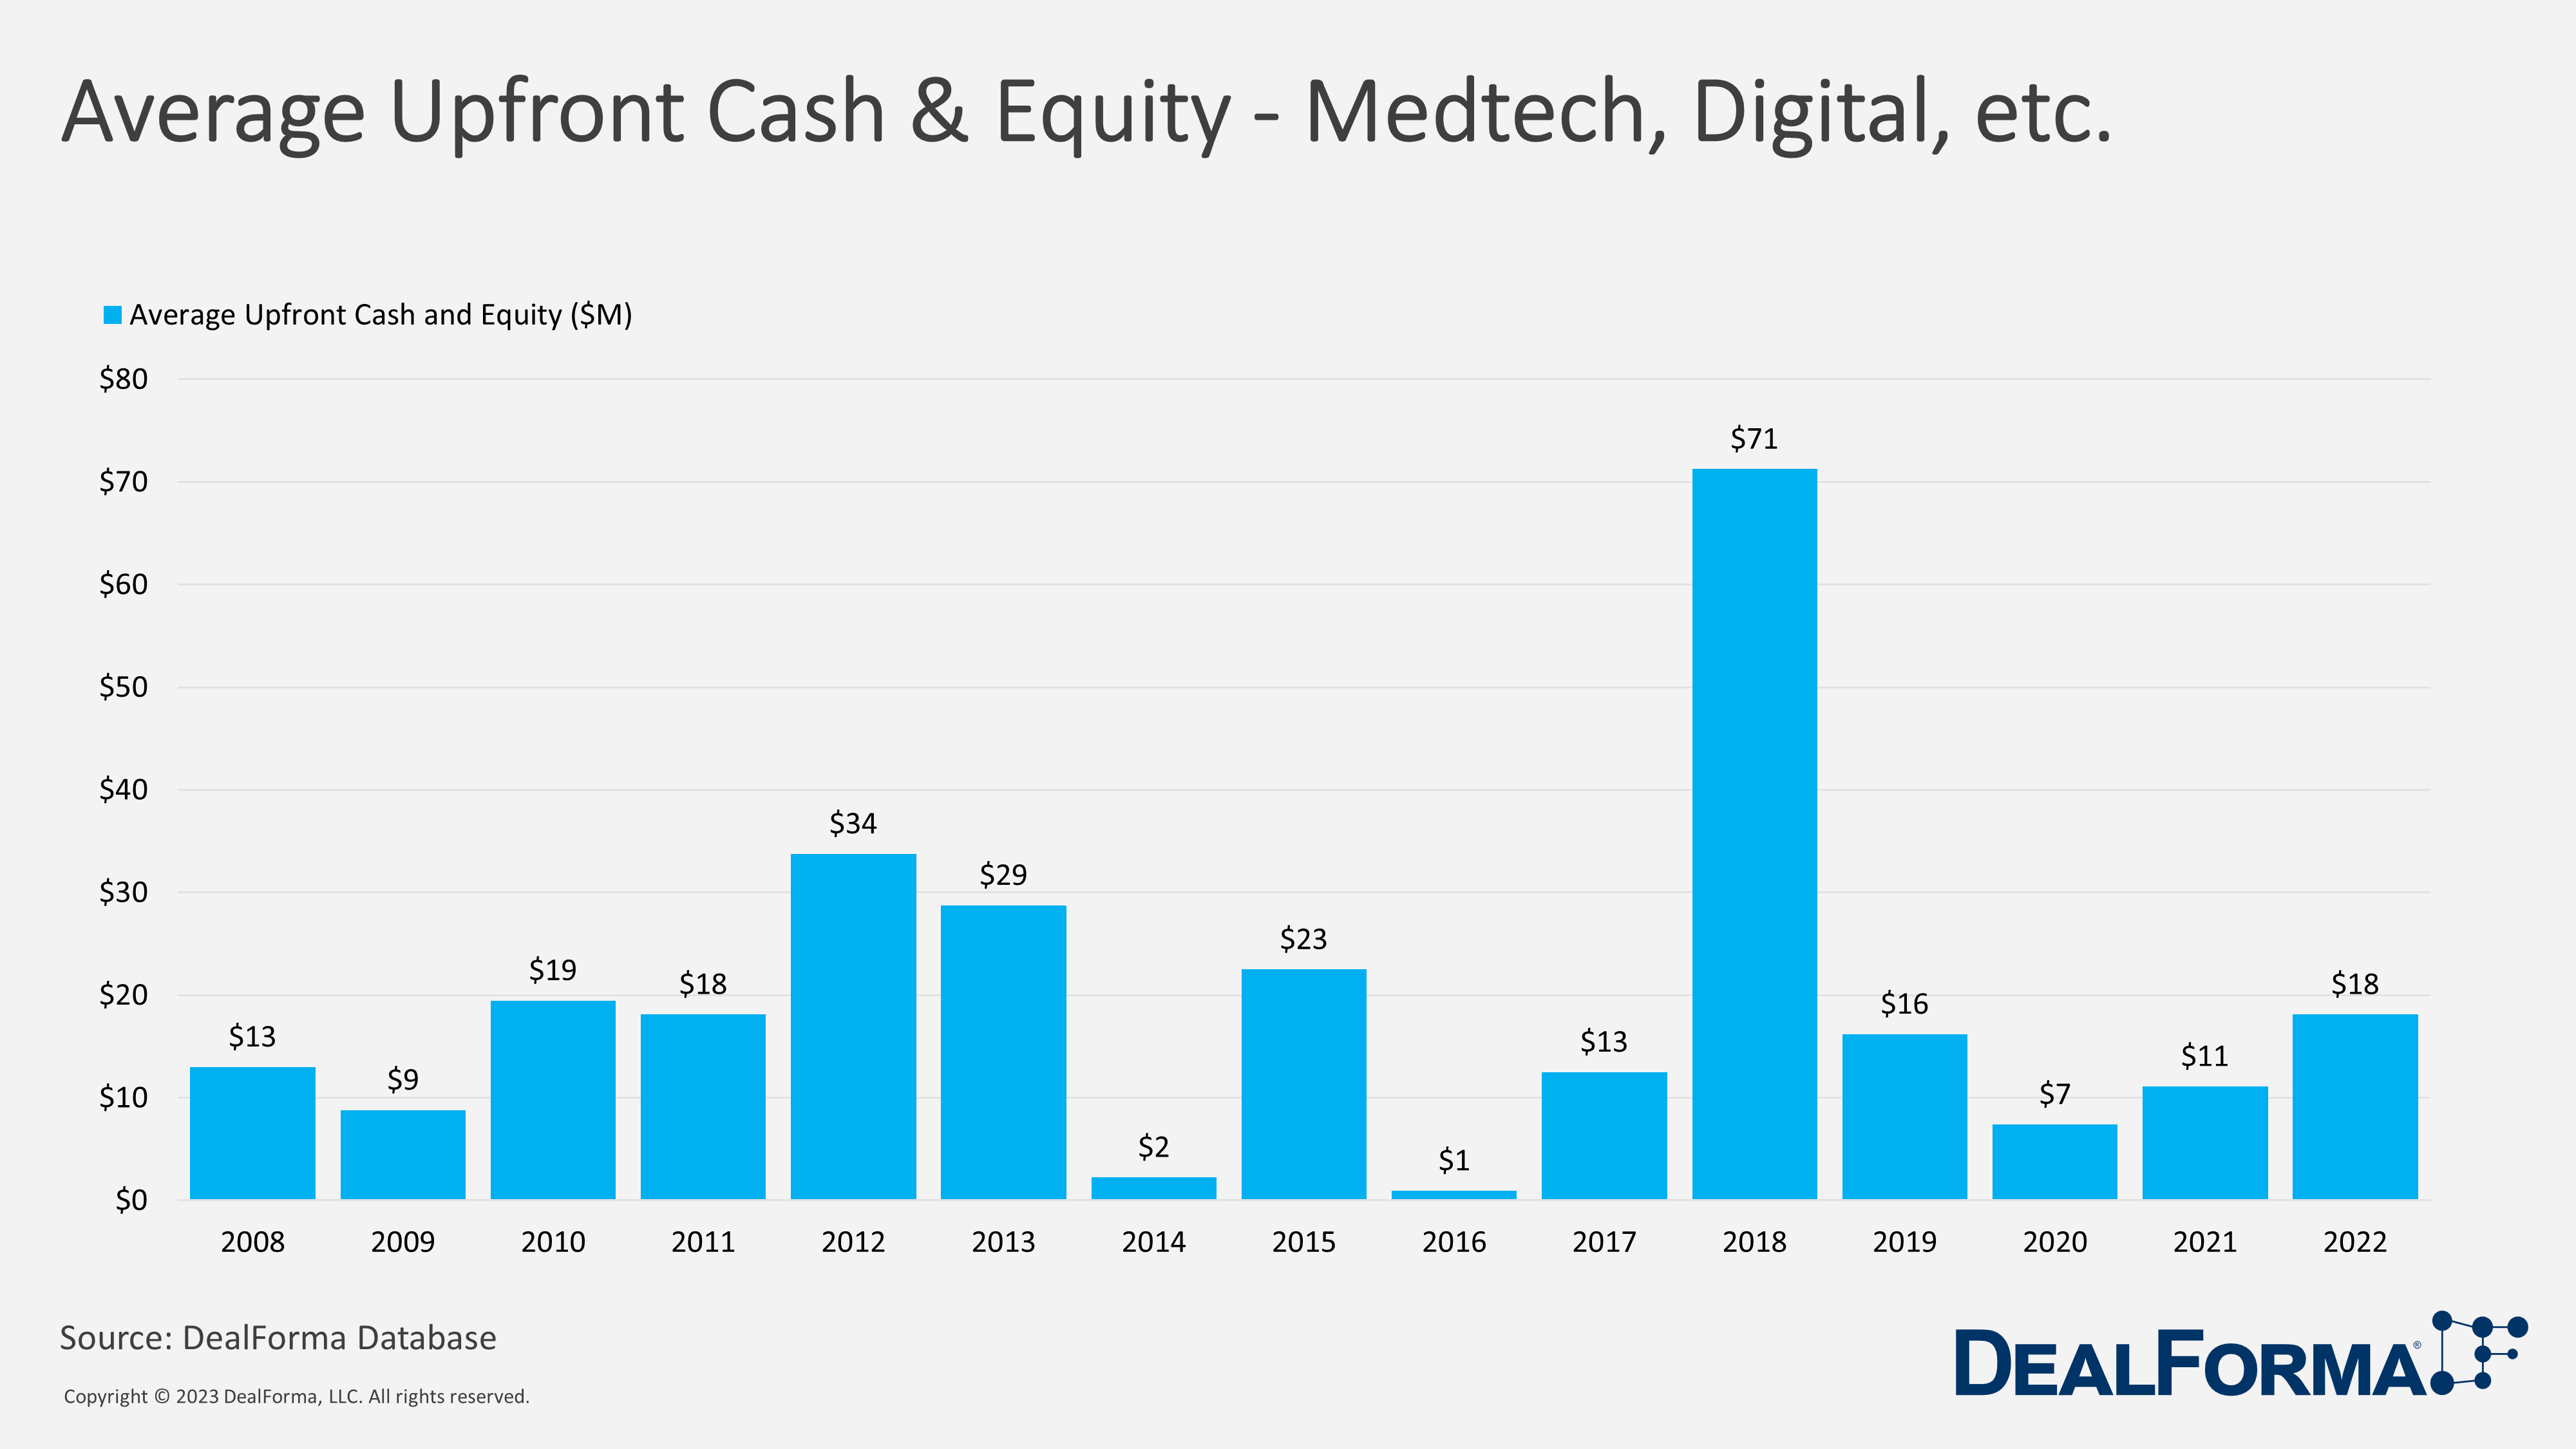 Average Upfront Cash & Equity - Medtech, Digital, Etc